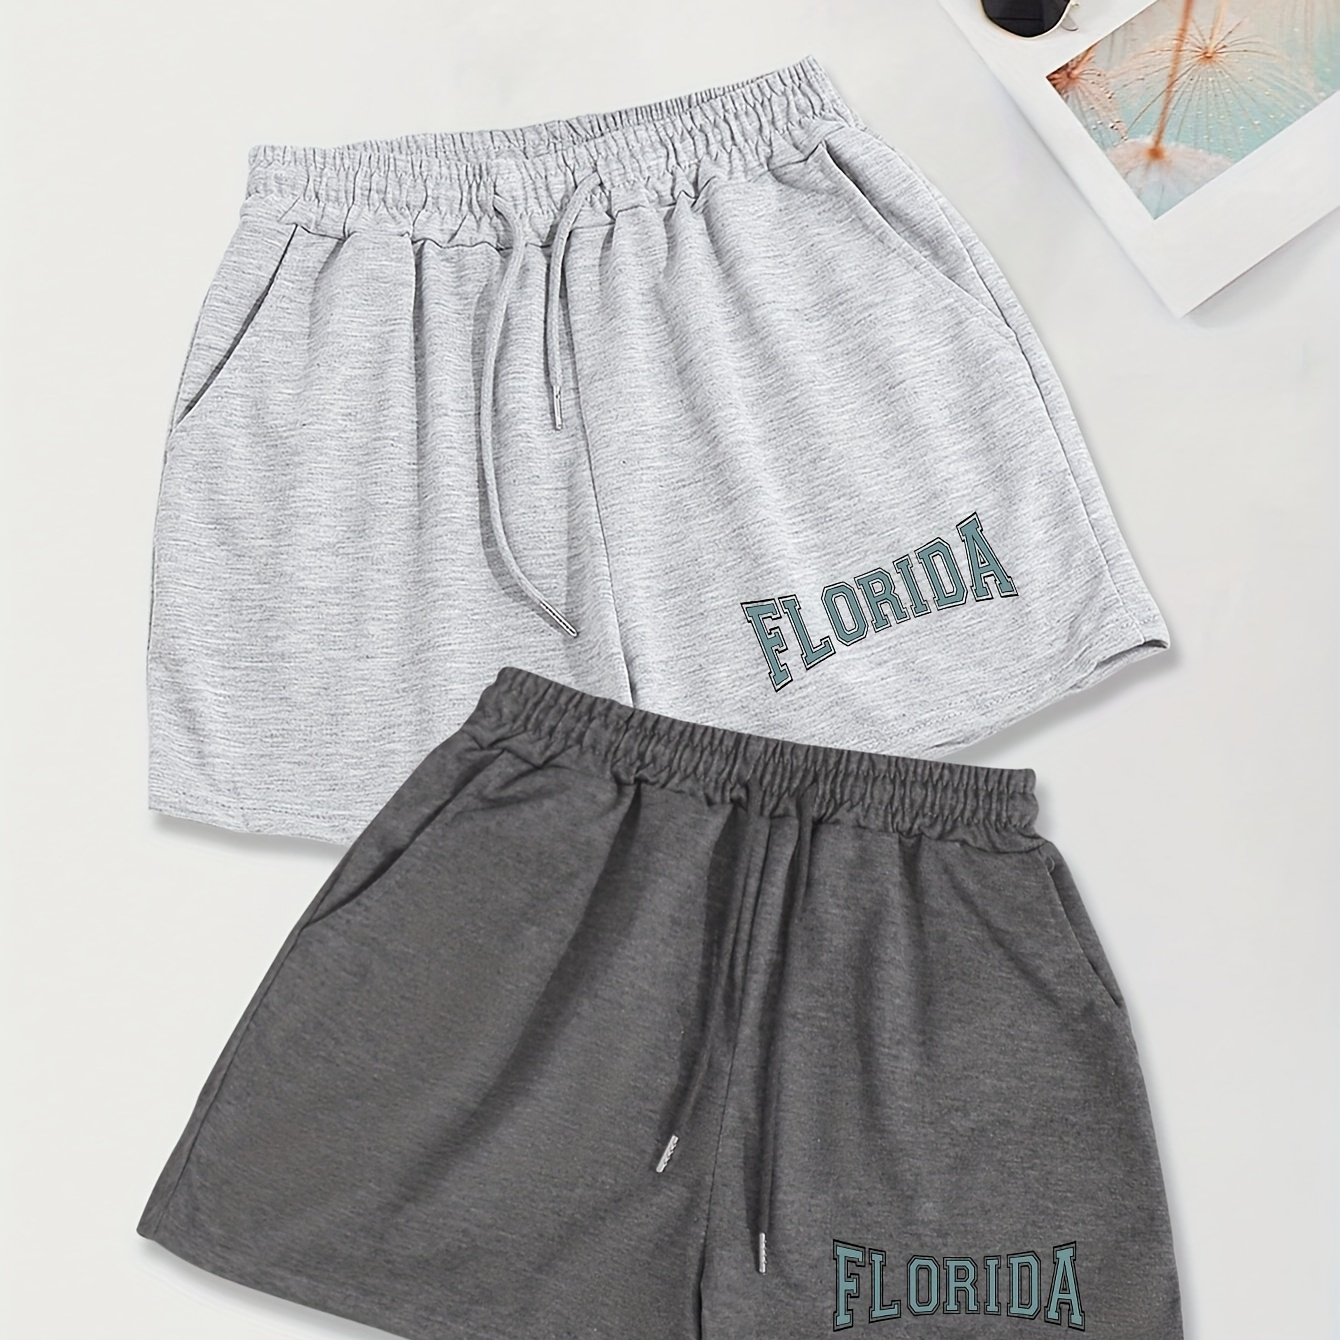 

2 Pack Florida Print Slant Pocket Shorts, Casual Elastic Waist Drawstring Shorts Outfits, Women's Clothing